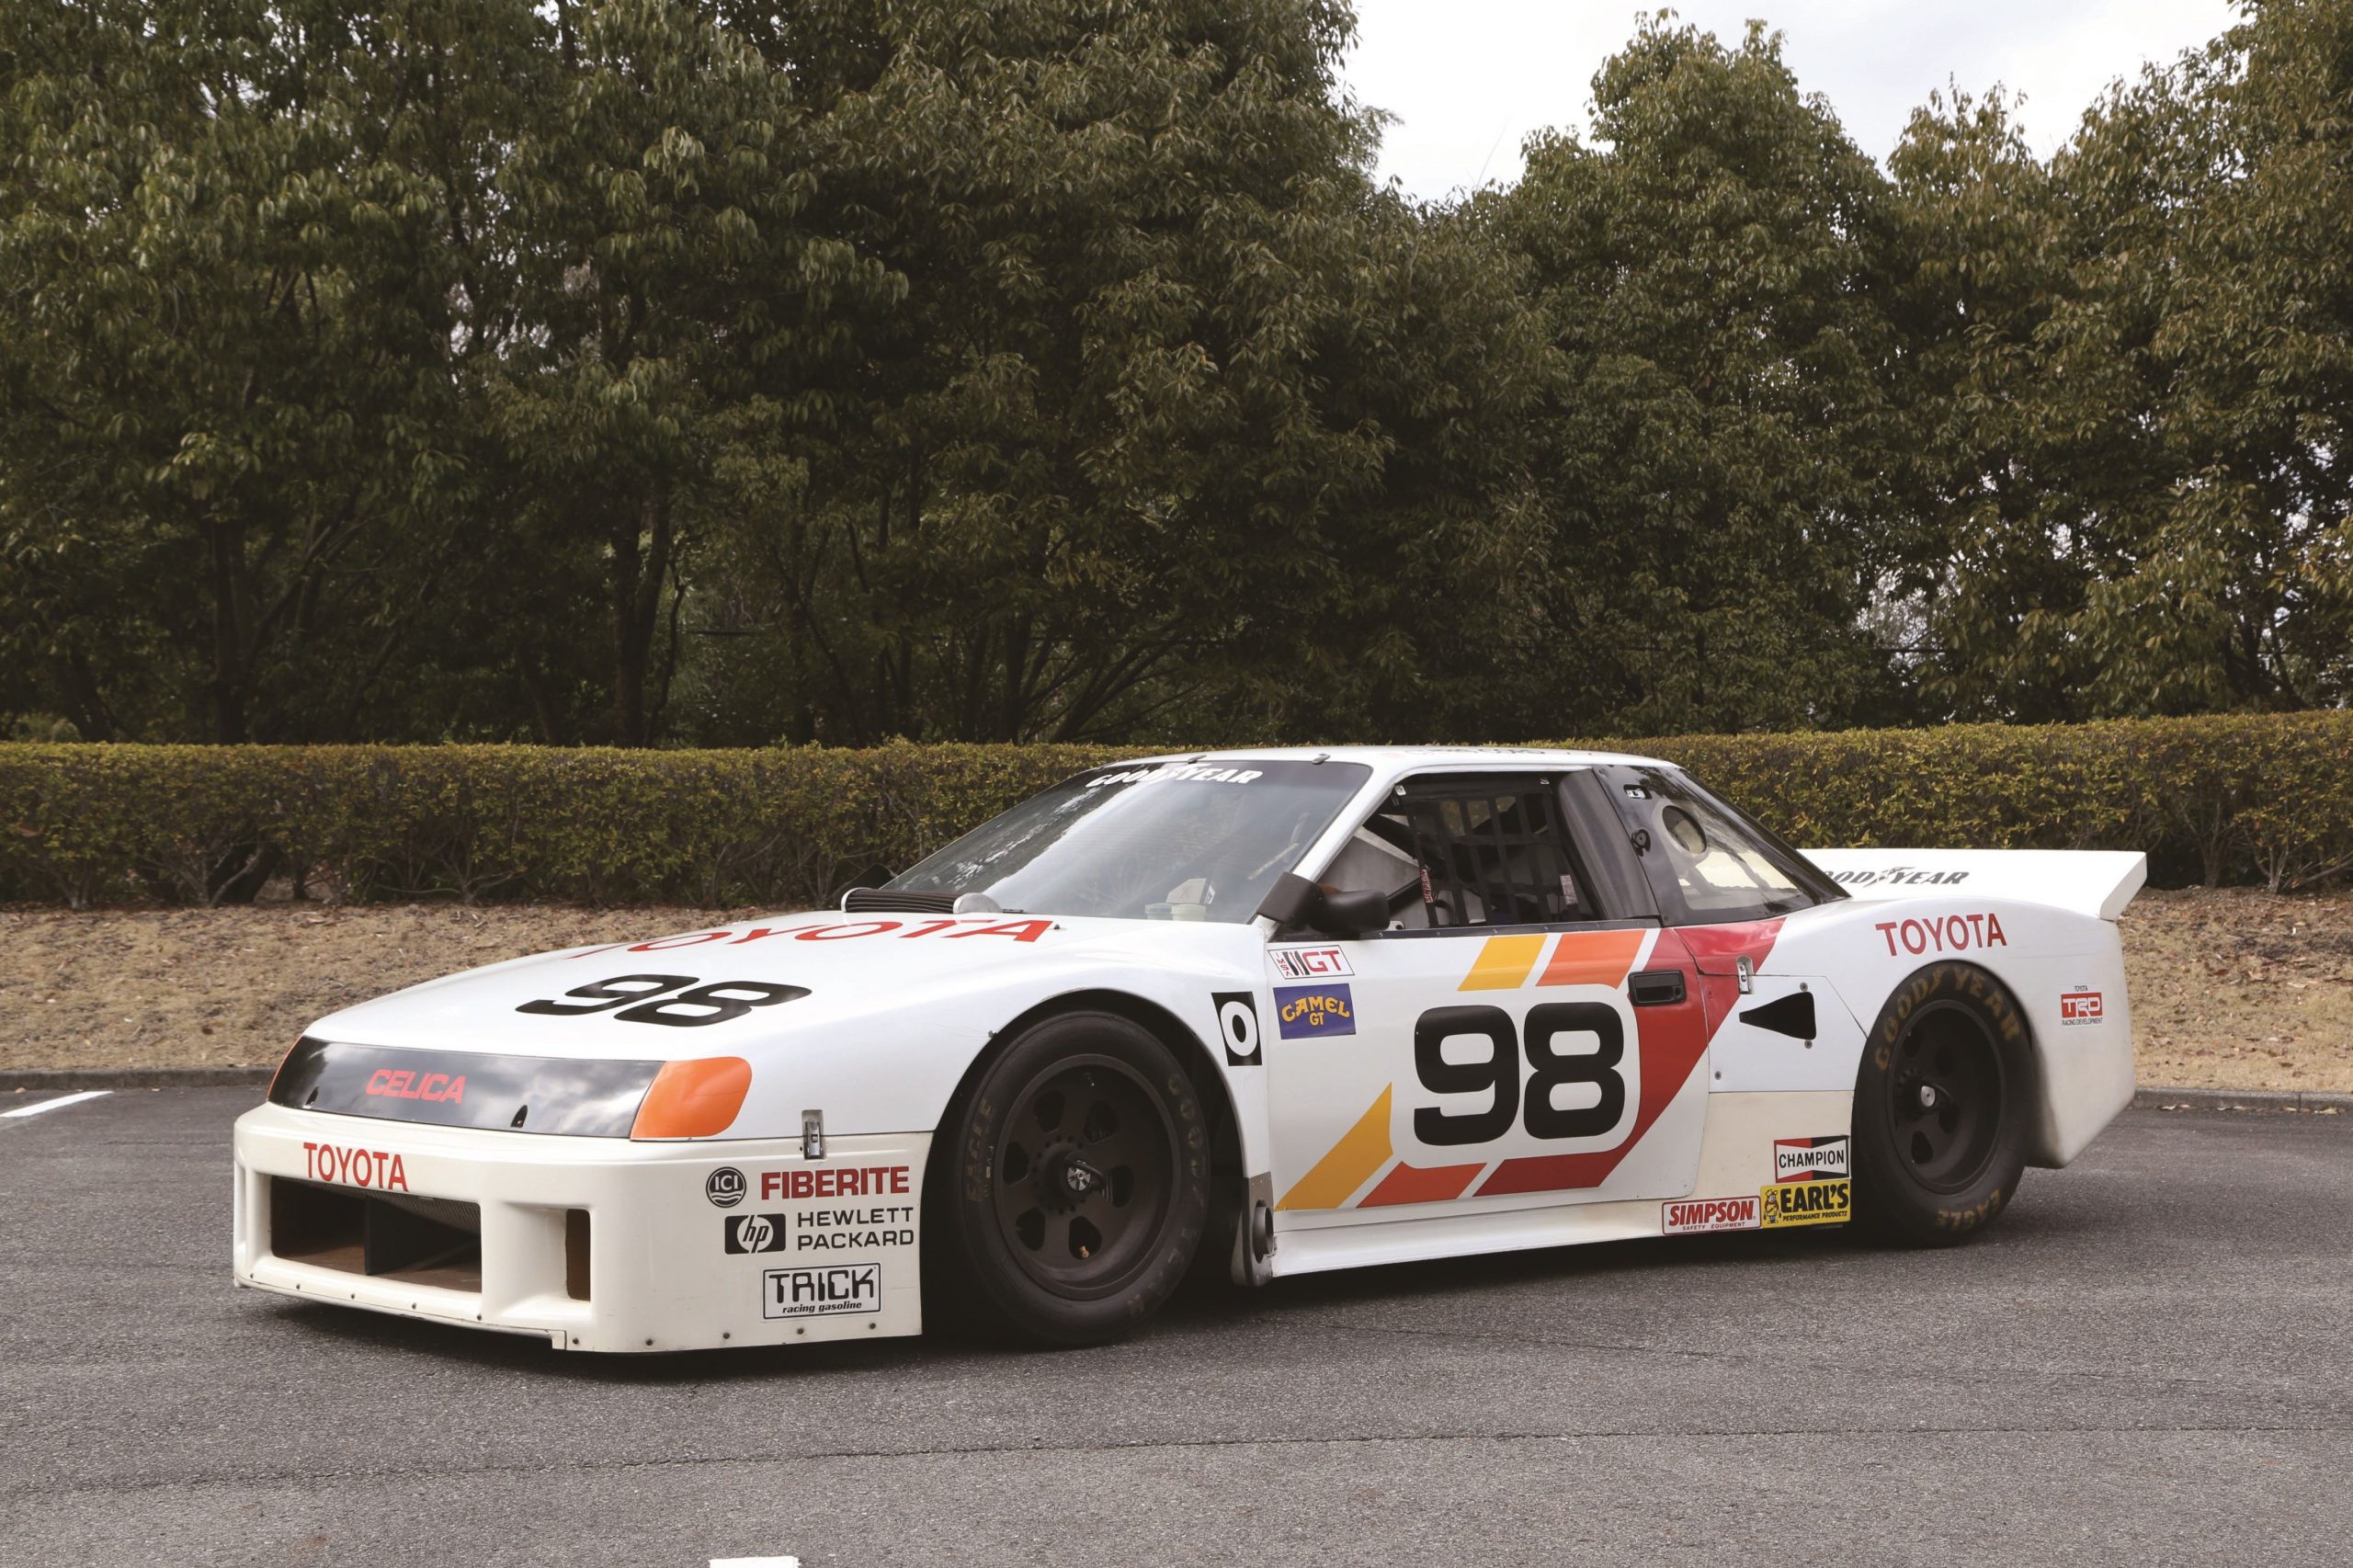 Toyota Celica Turbo: a GTO-class entrant to the 1988 IMSA race【1988】